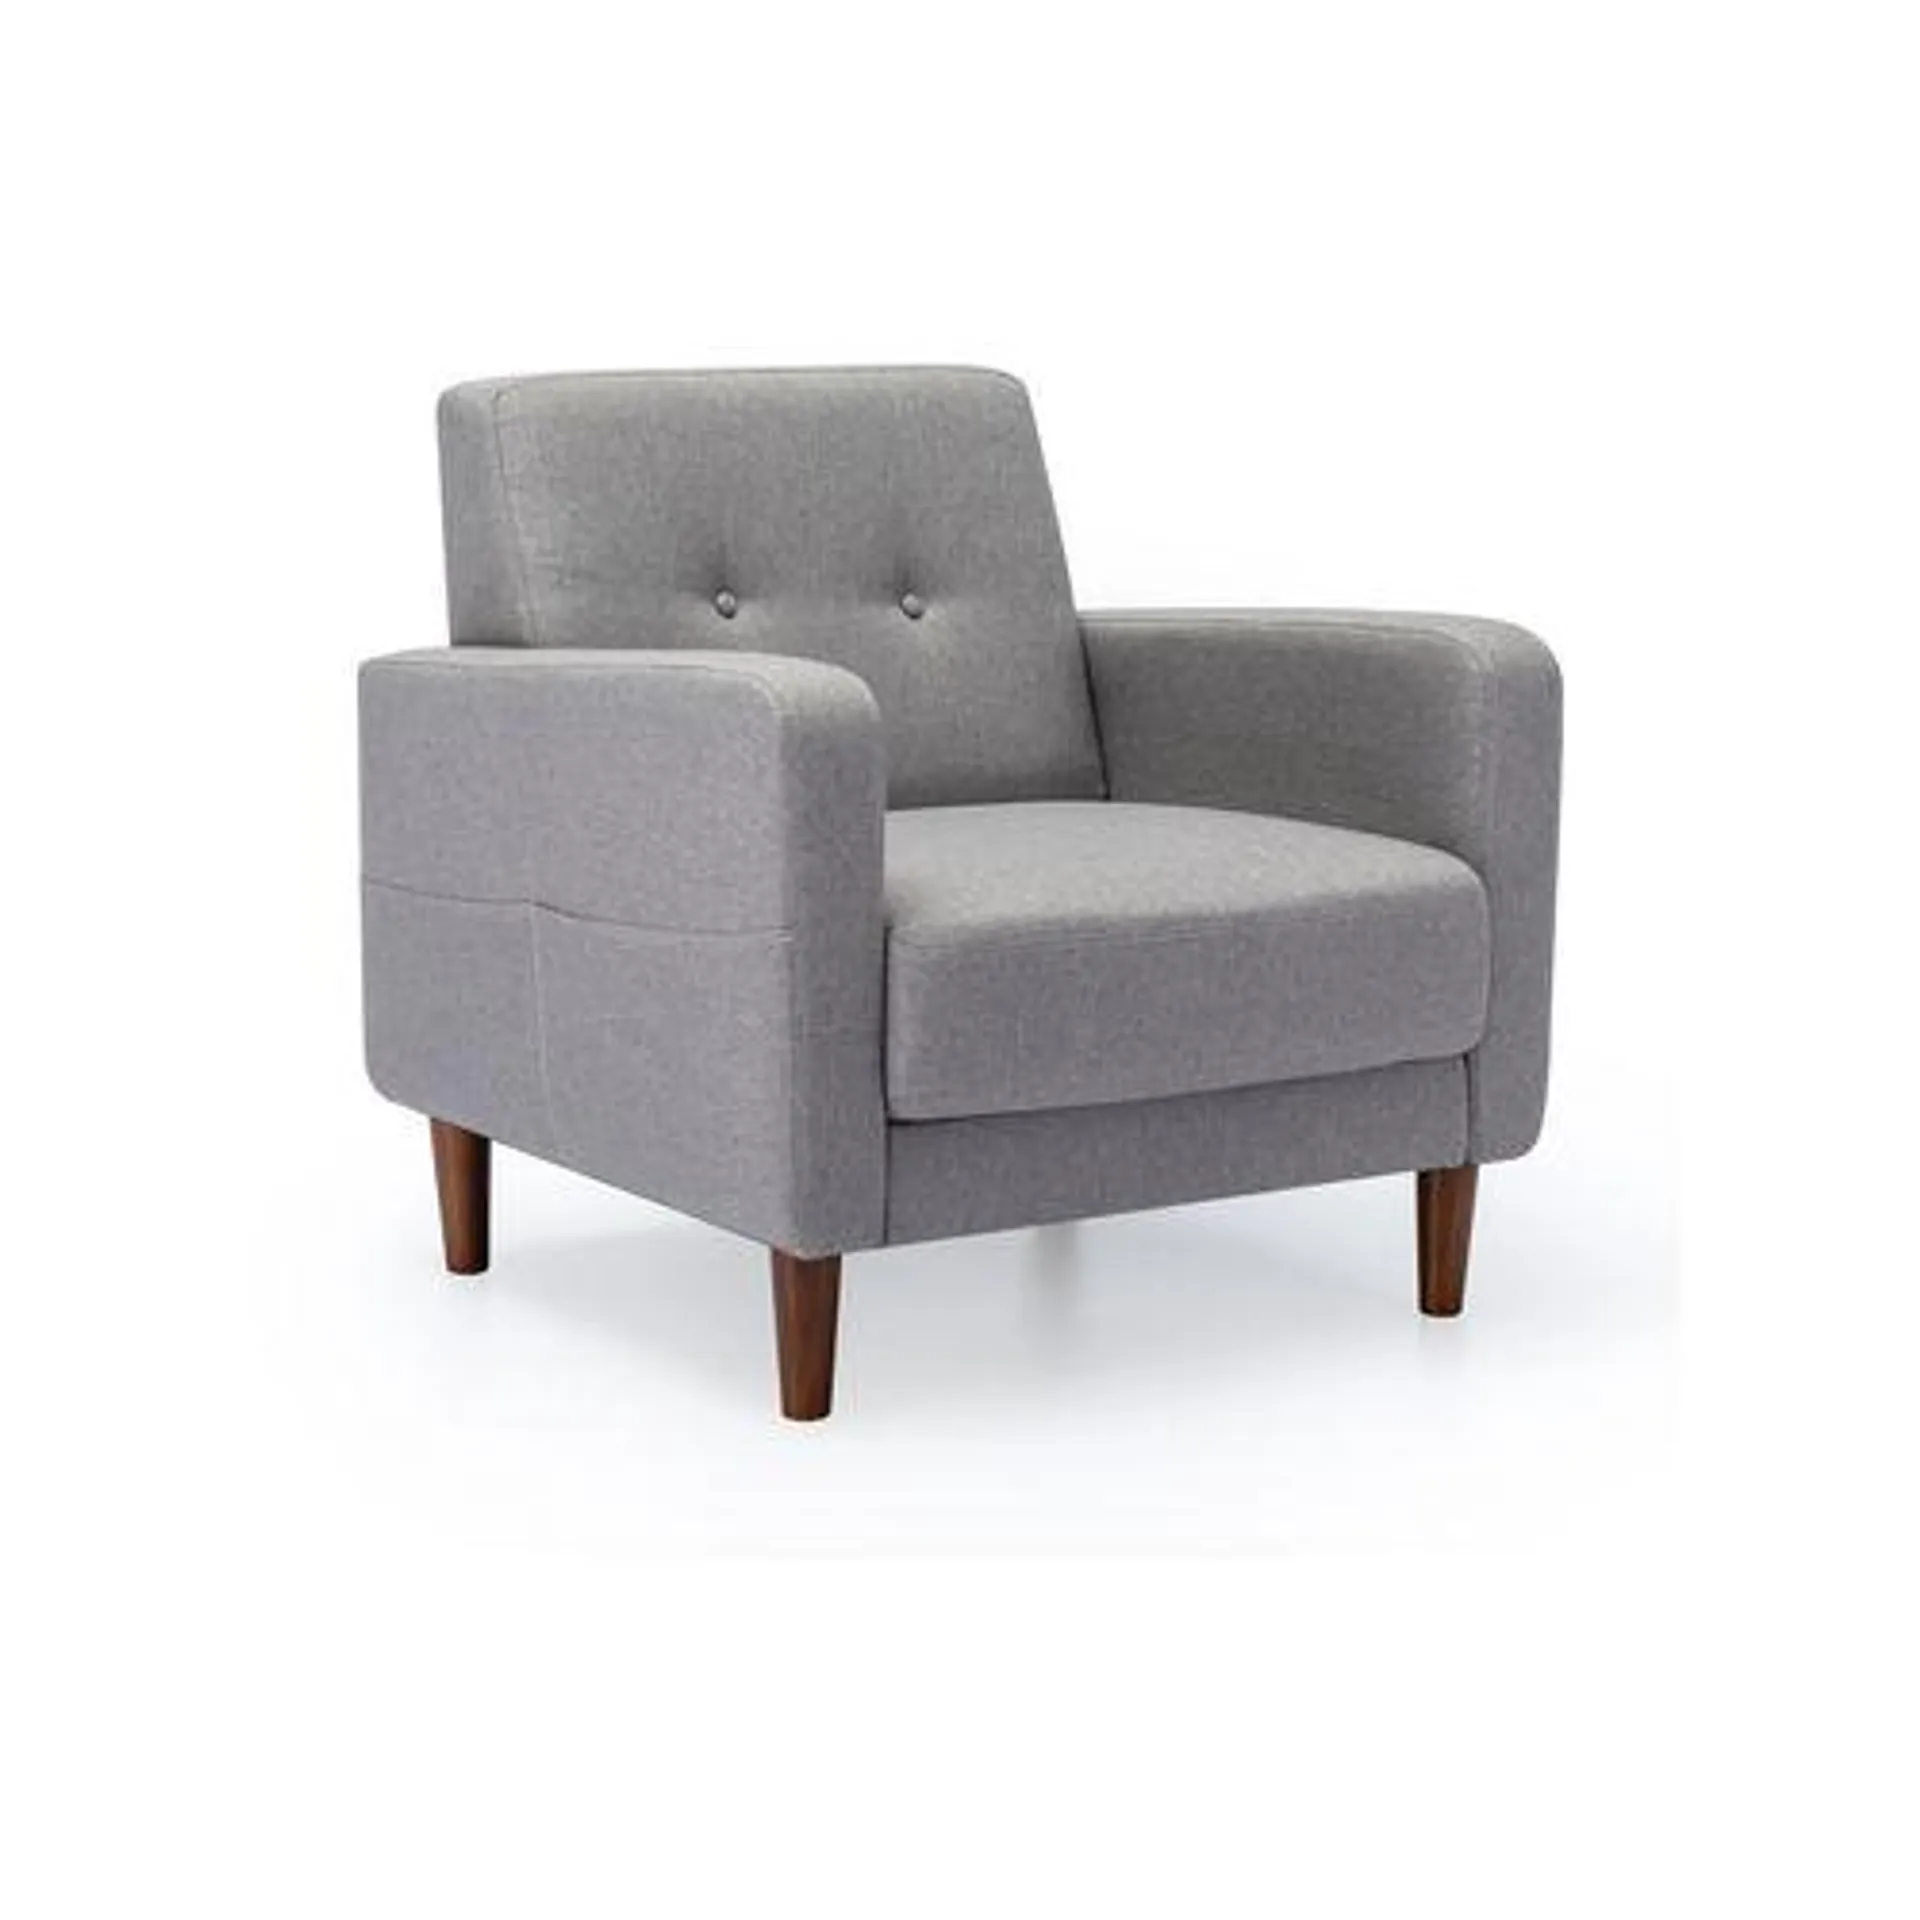 Zinus Adair Mid-century Modern Armchair With Armrest Pockets - Light Grey